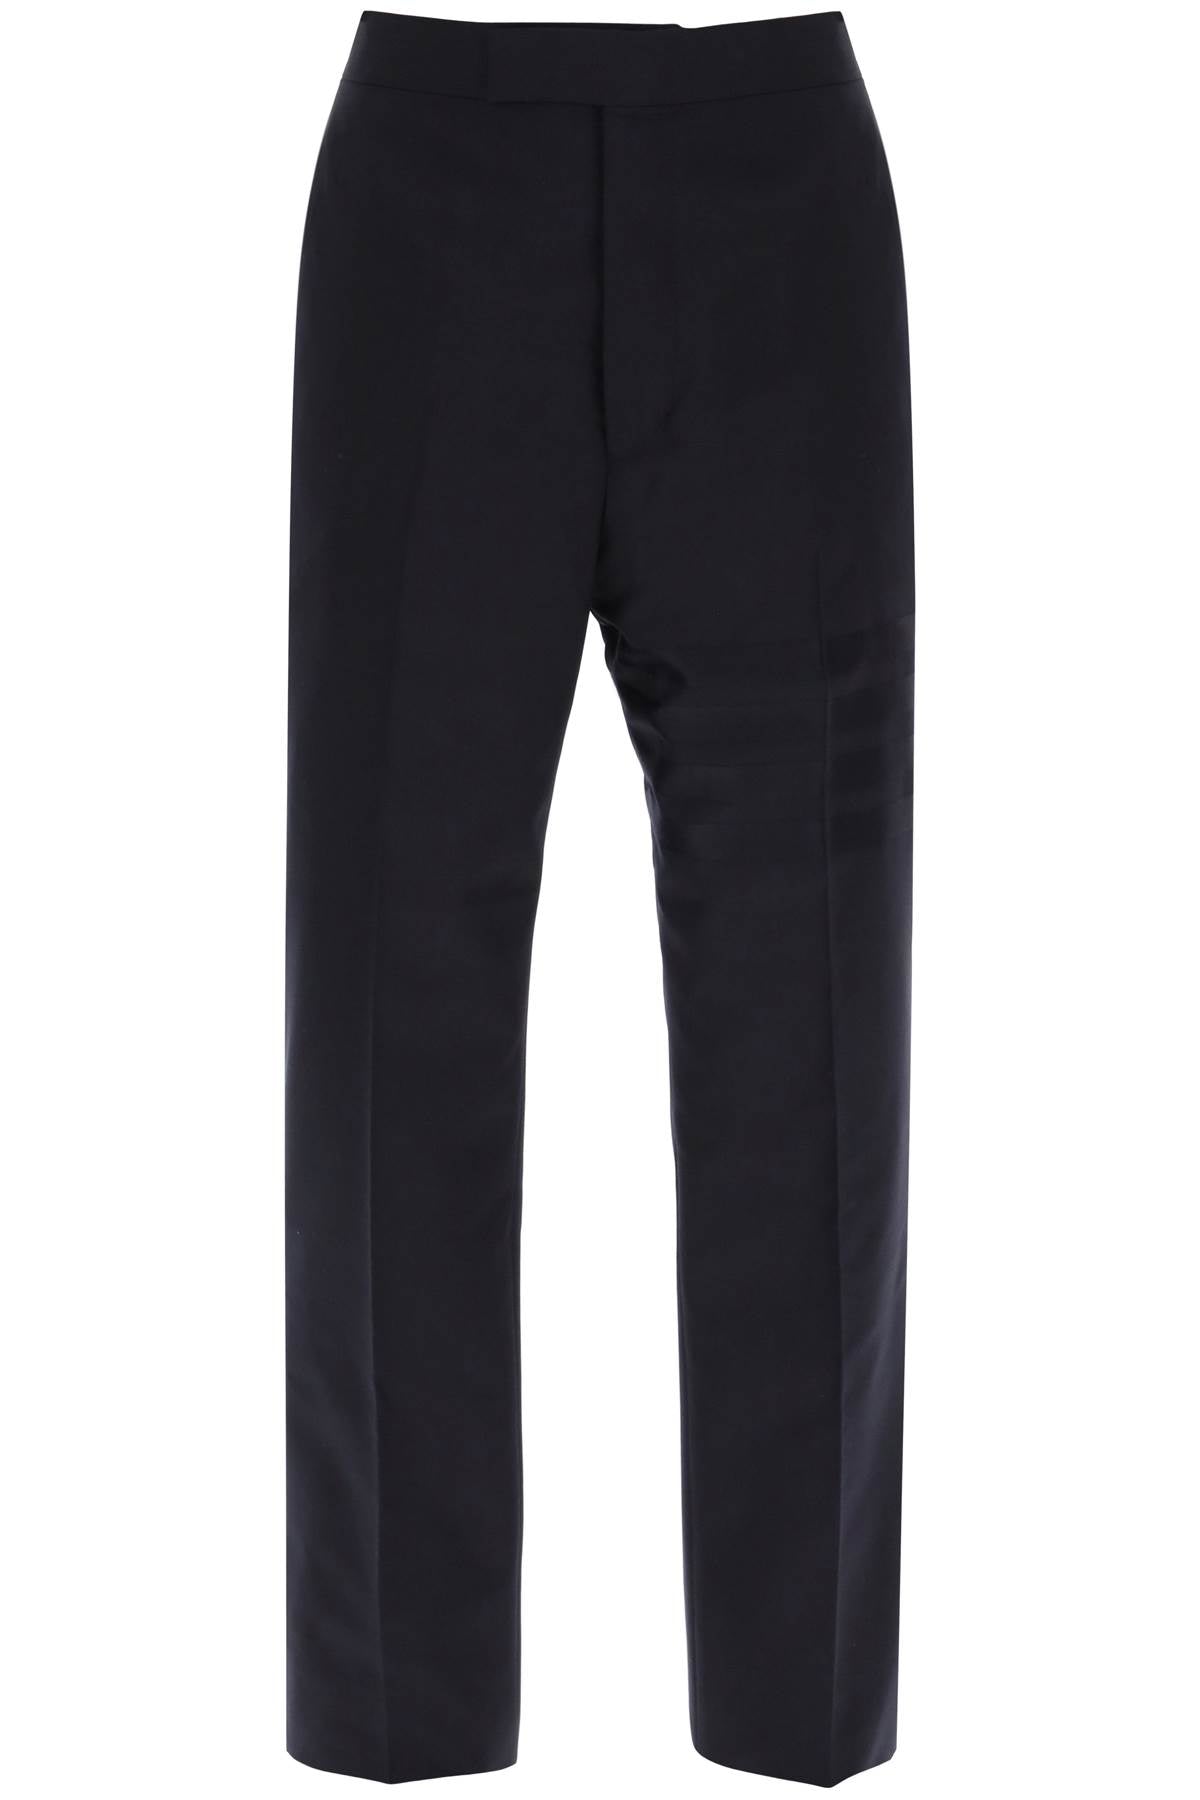 Thom browne 4-bar wool trousers MTC001A06146 DARK BLUE